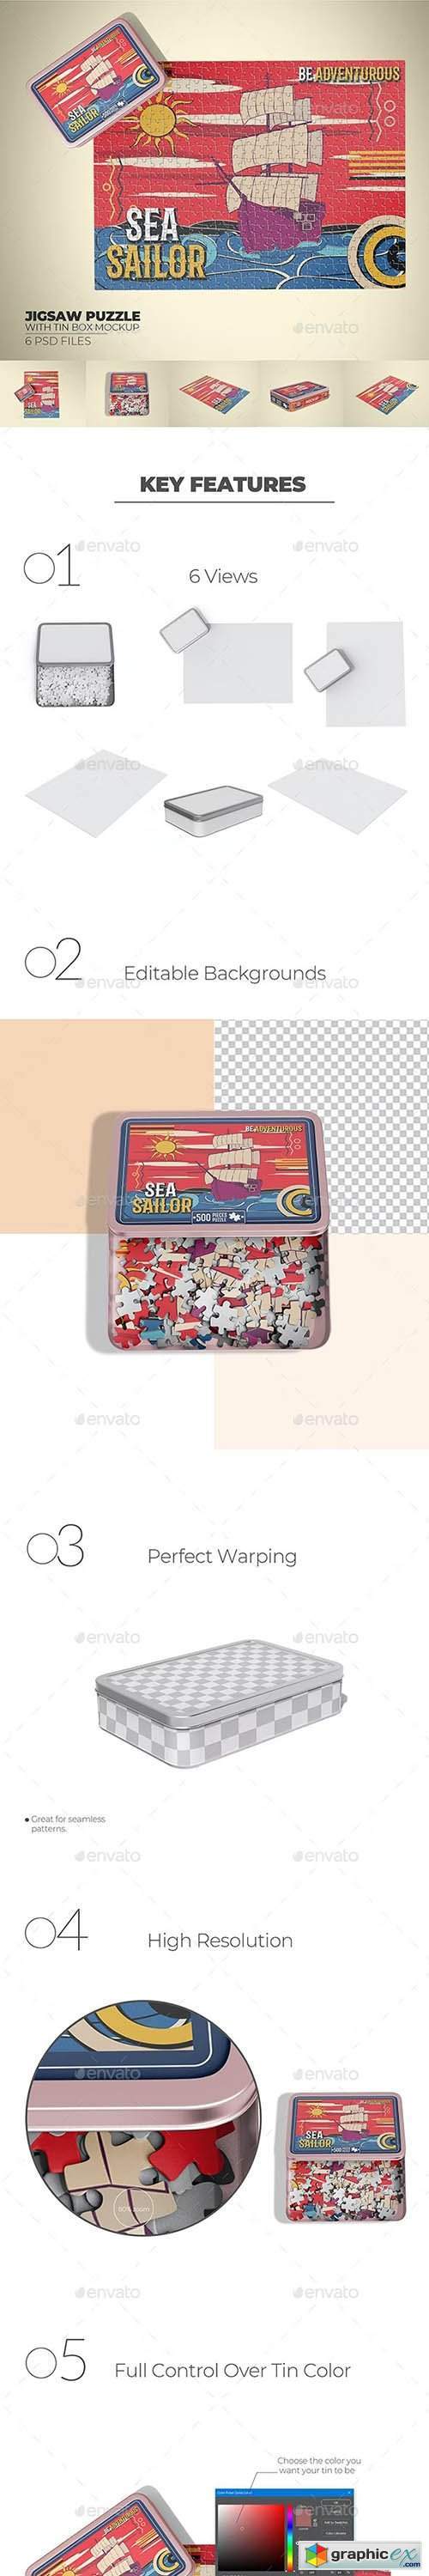 Jigsaw Puzzle Board With Rectangular Tin Box Mockup 36581388